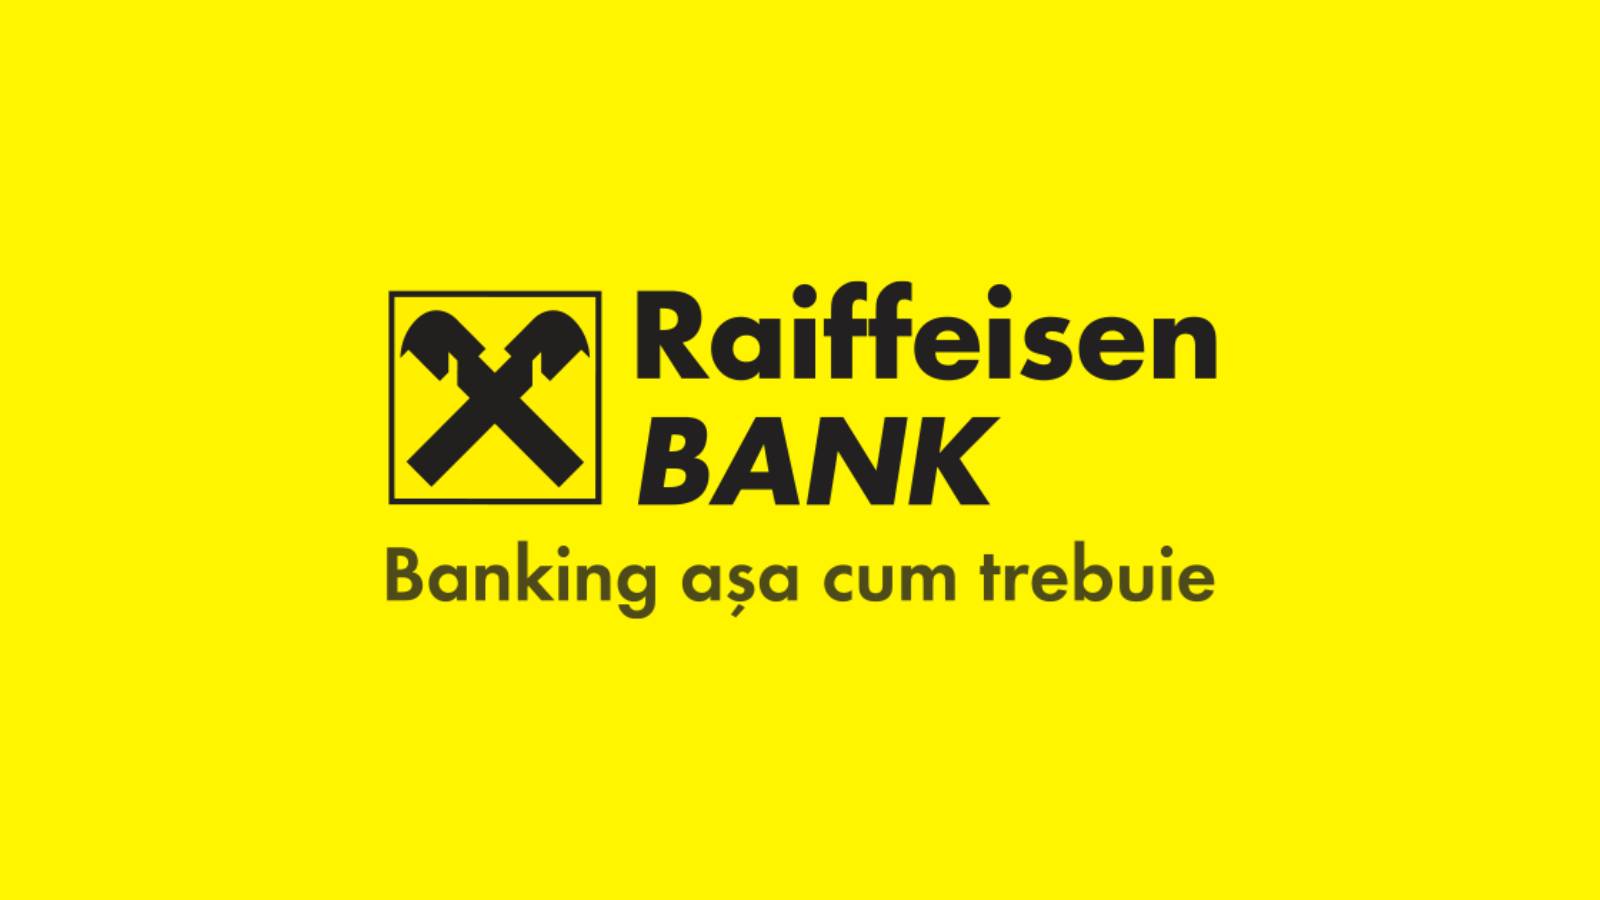 Raiffeisen Bank holidays